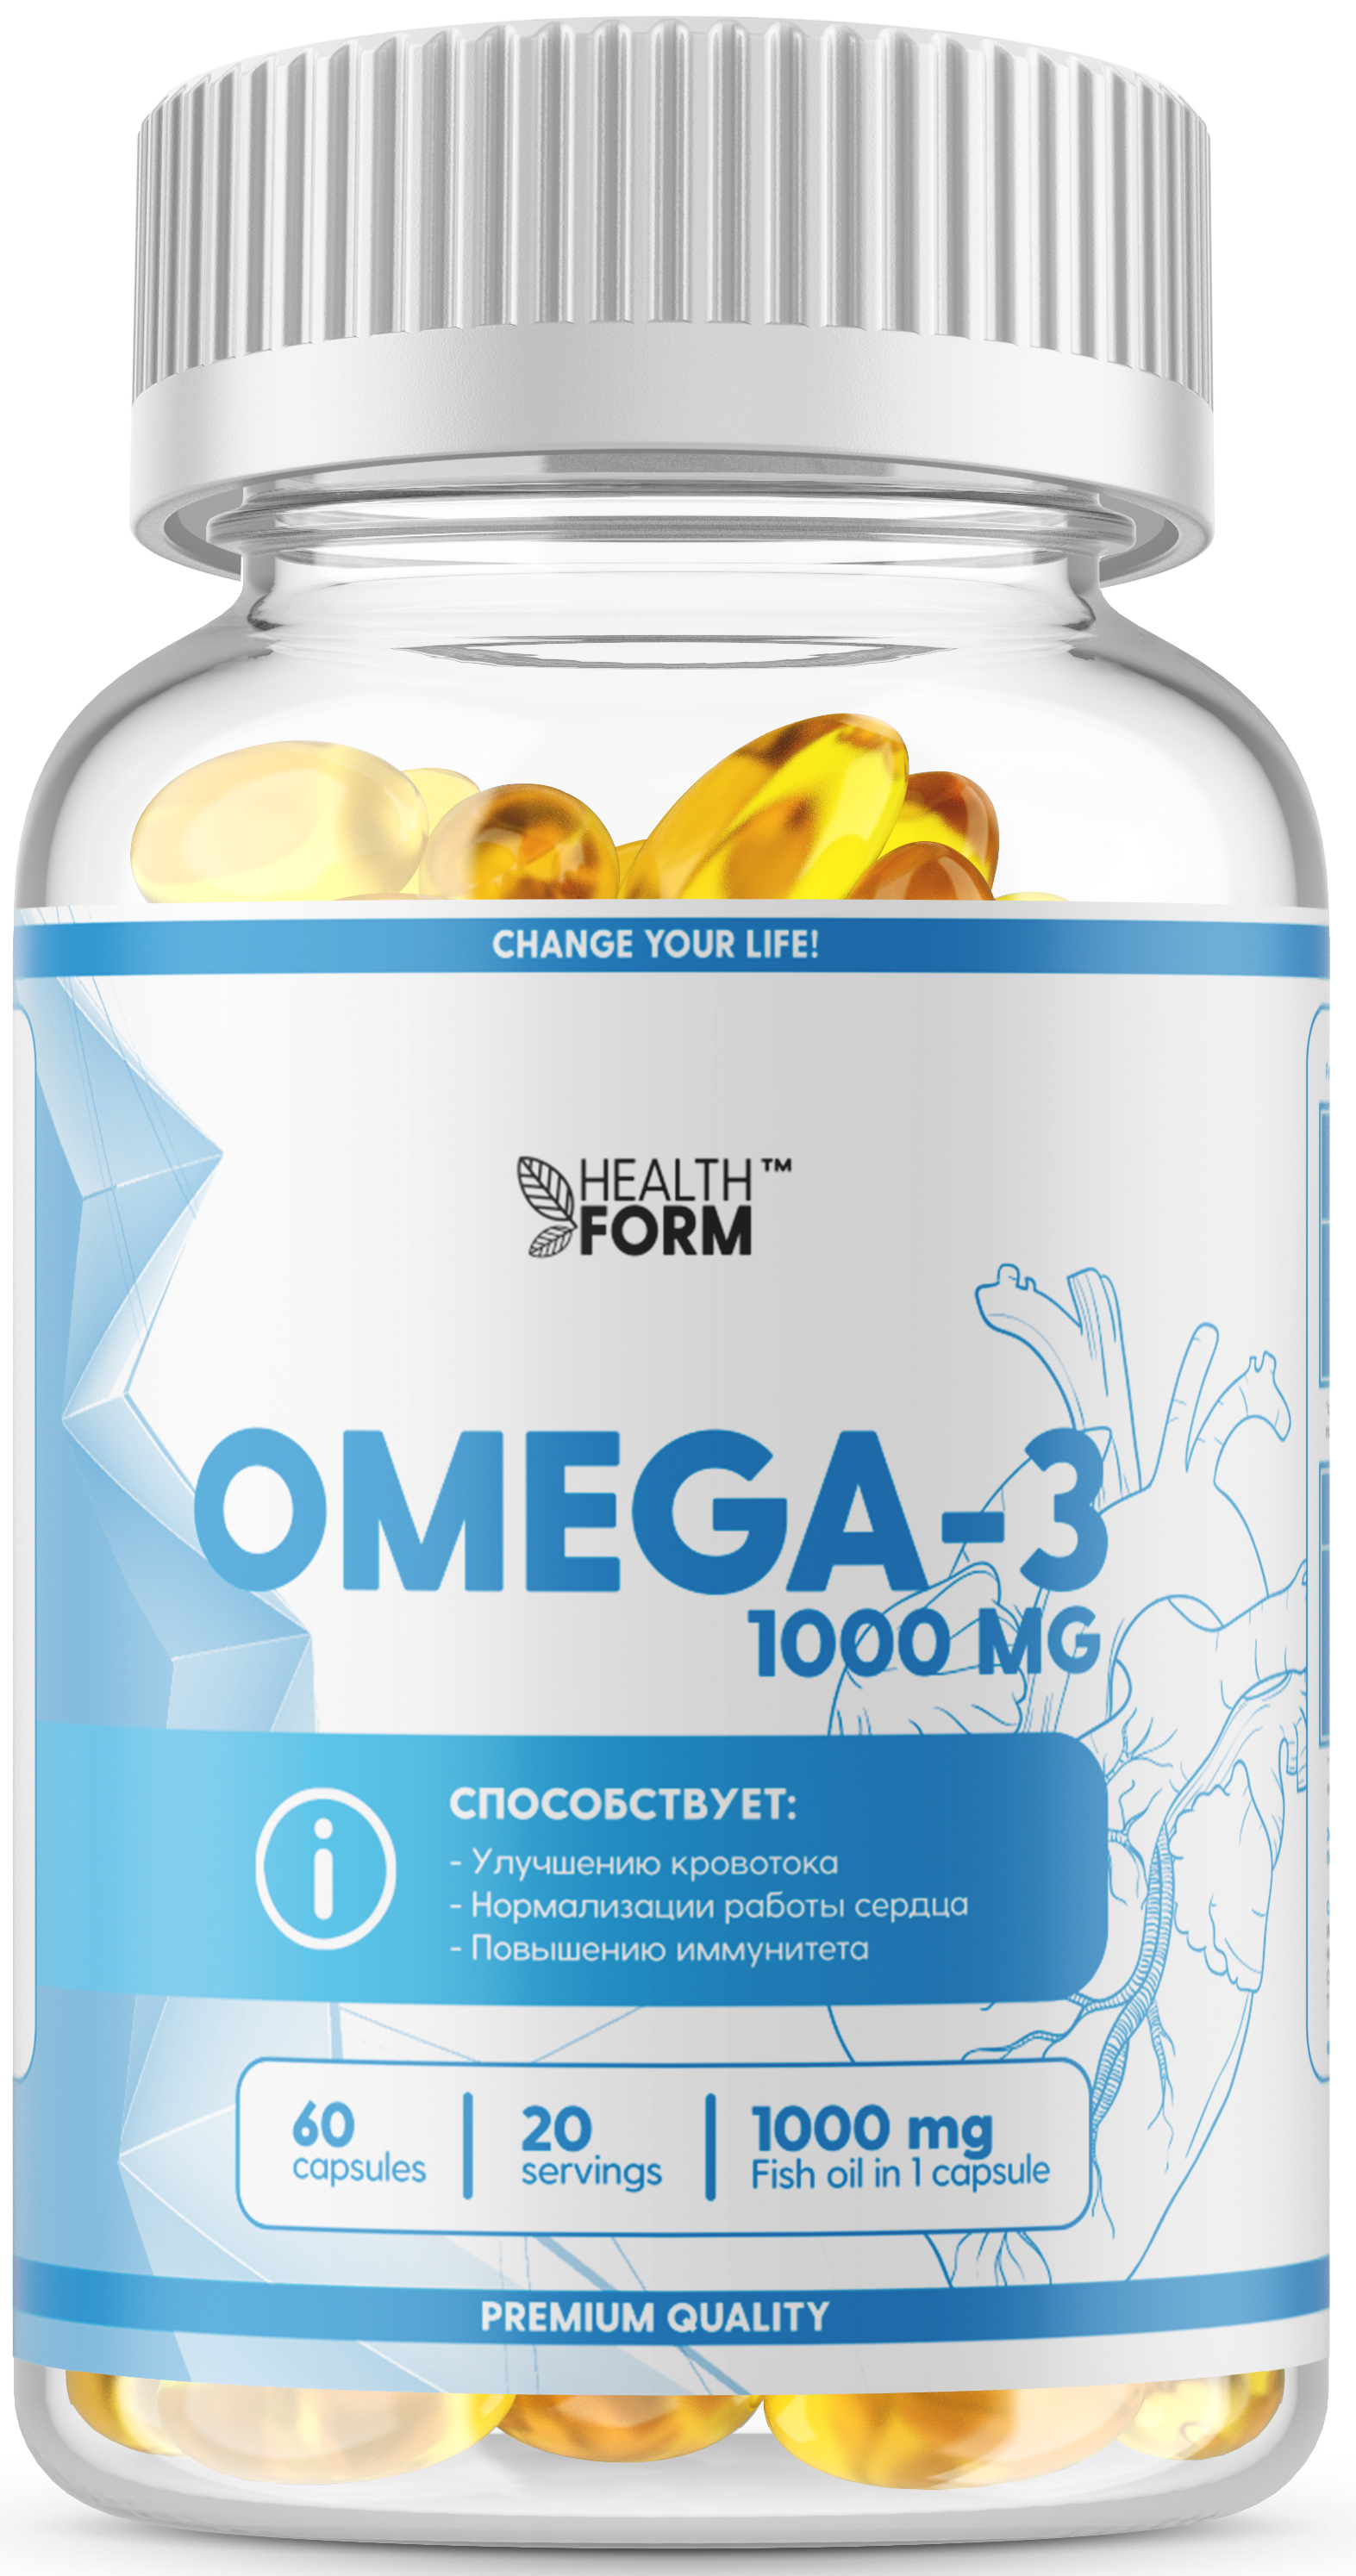 Omega 3 1000mg Health Form  4490 тенге